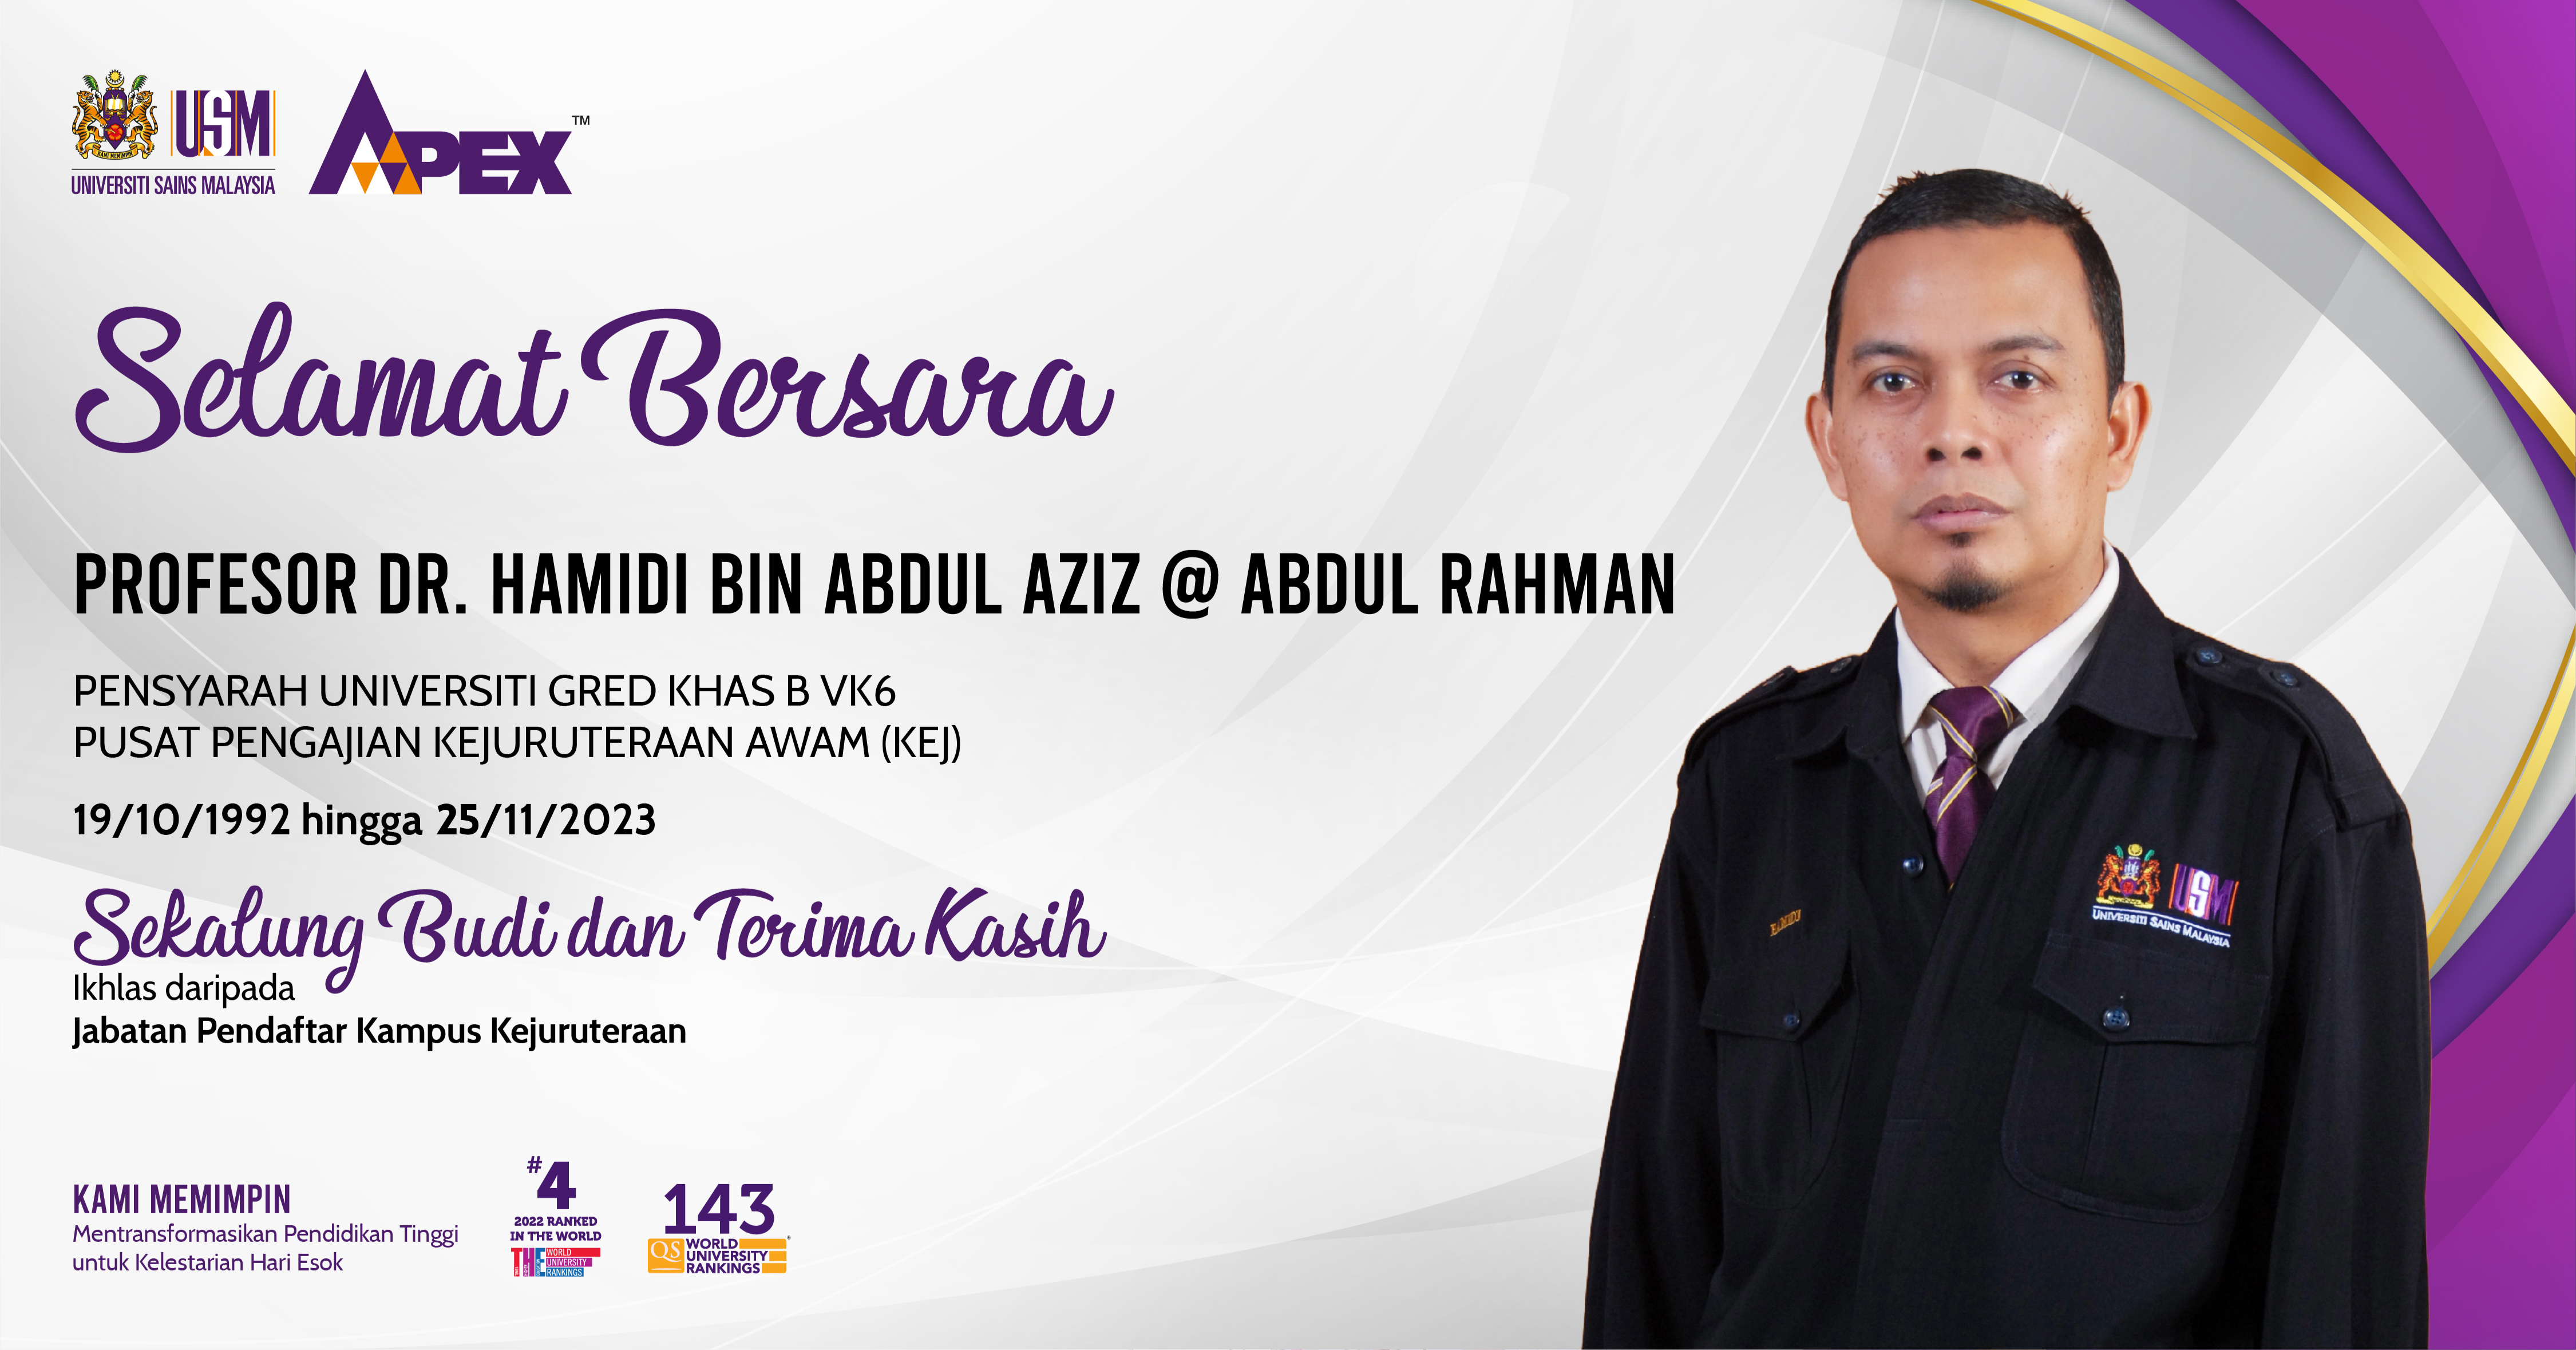 rework selamat bersara Professor Dr. Hamidi Bin Abdul Aziz Abdul Rahman103079